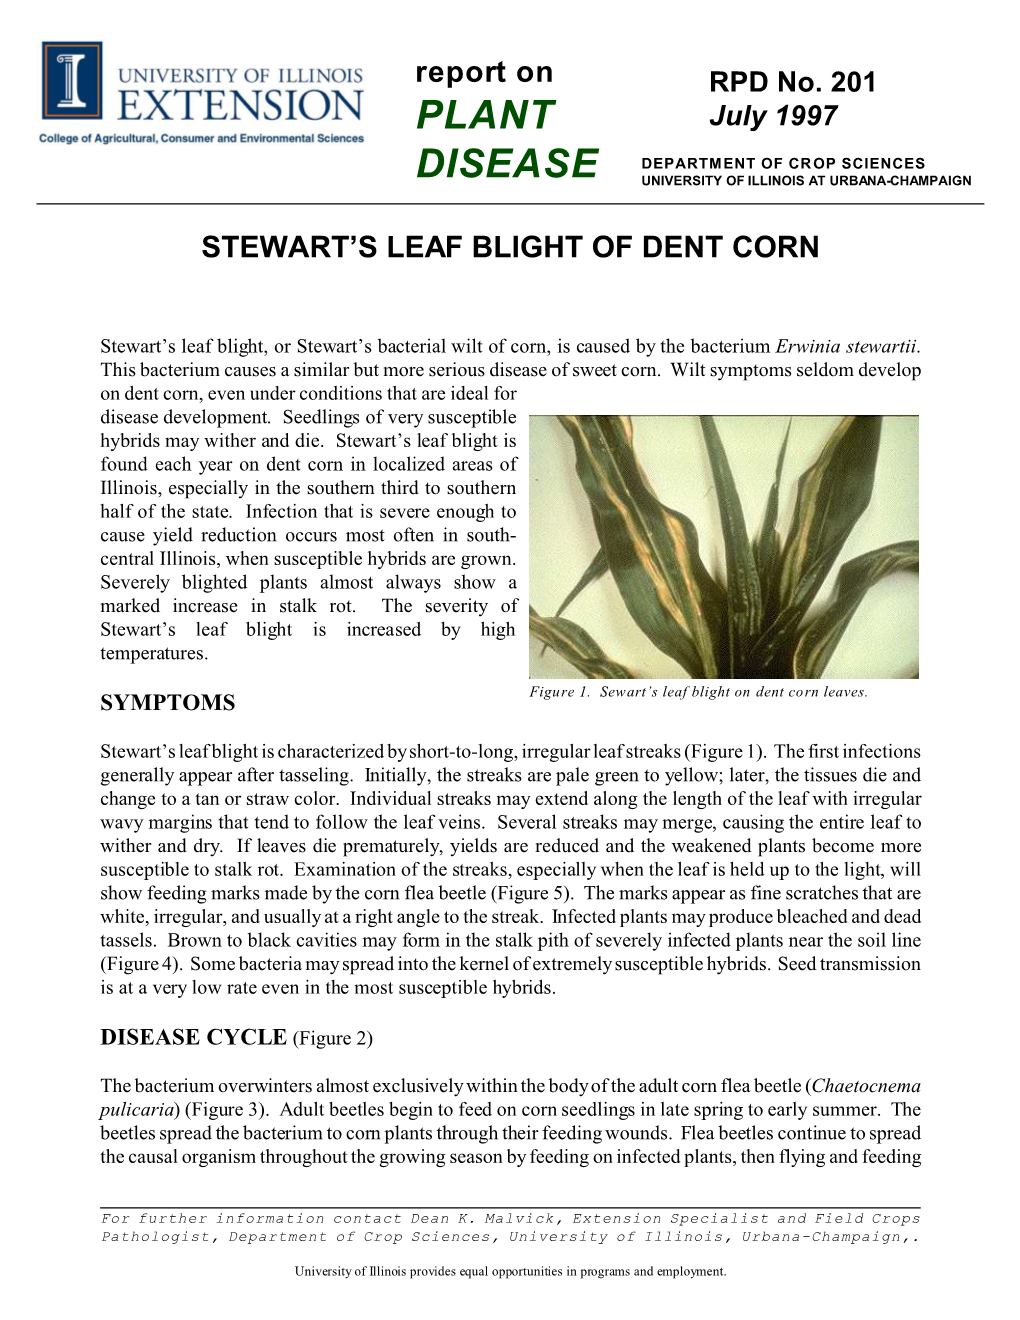 Stewart's Leaf Blight of Corn, RPD No